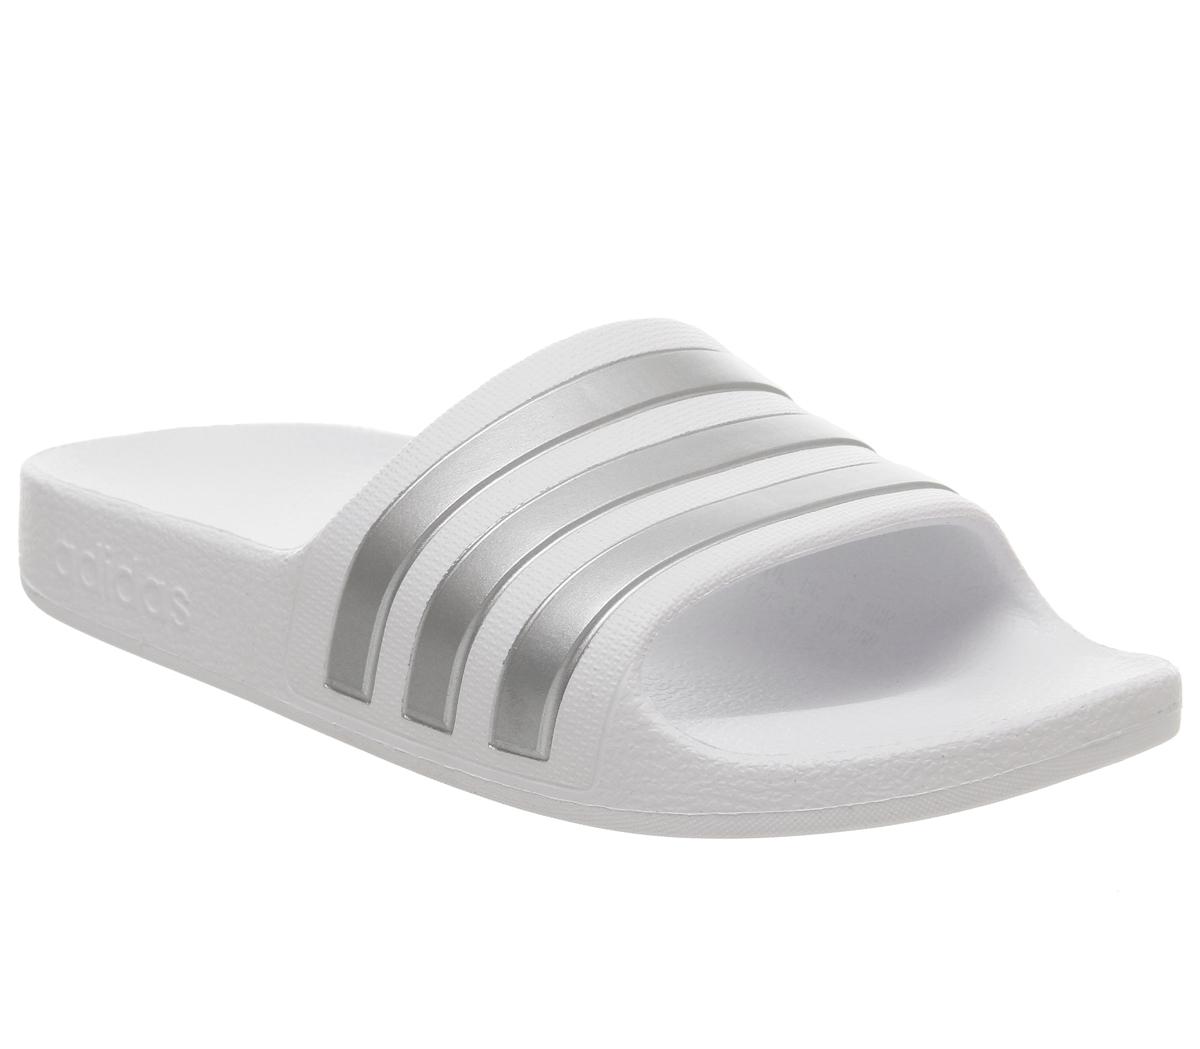 adilette sandals white